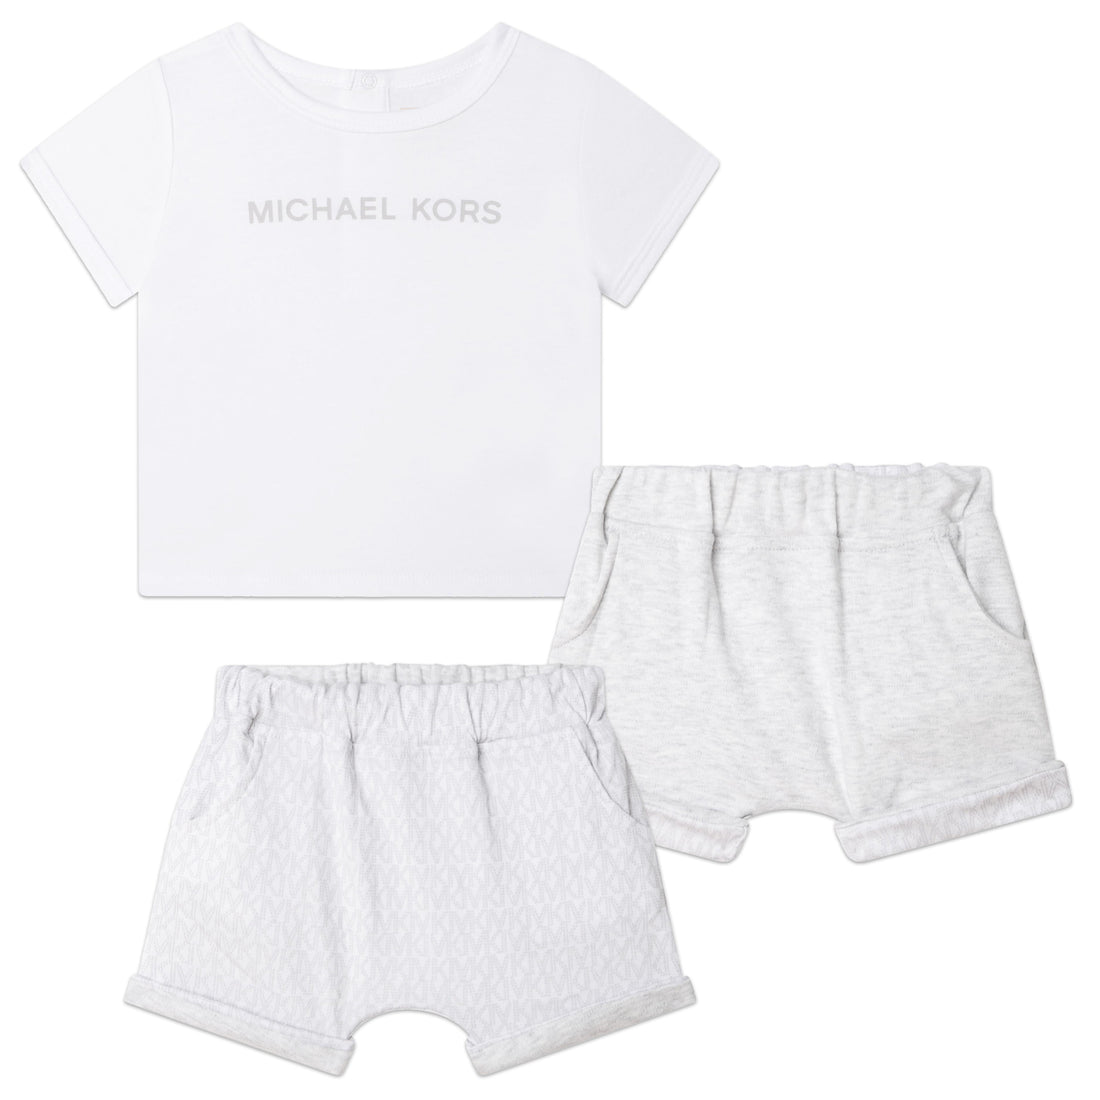 Michael Kors T-Shirt And Bermuda Shorts Style: R98112